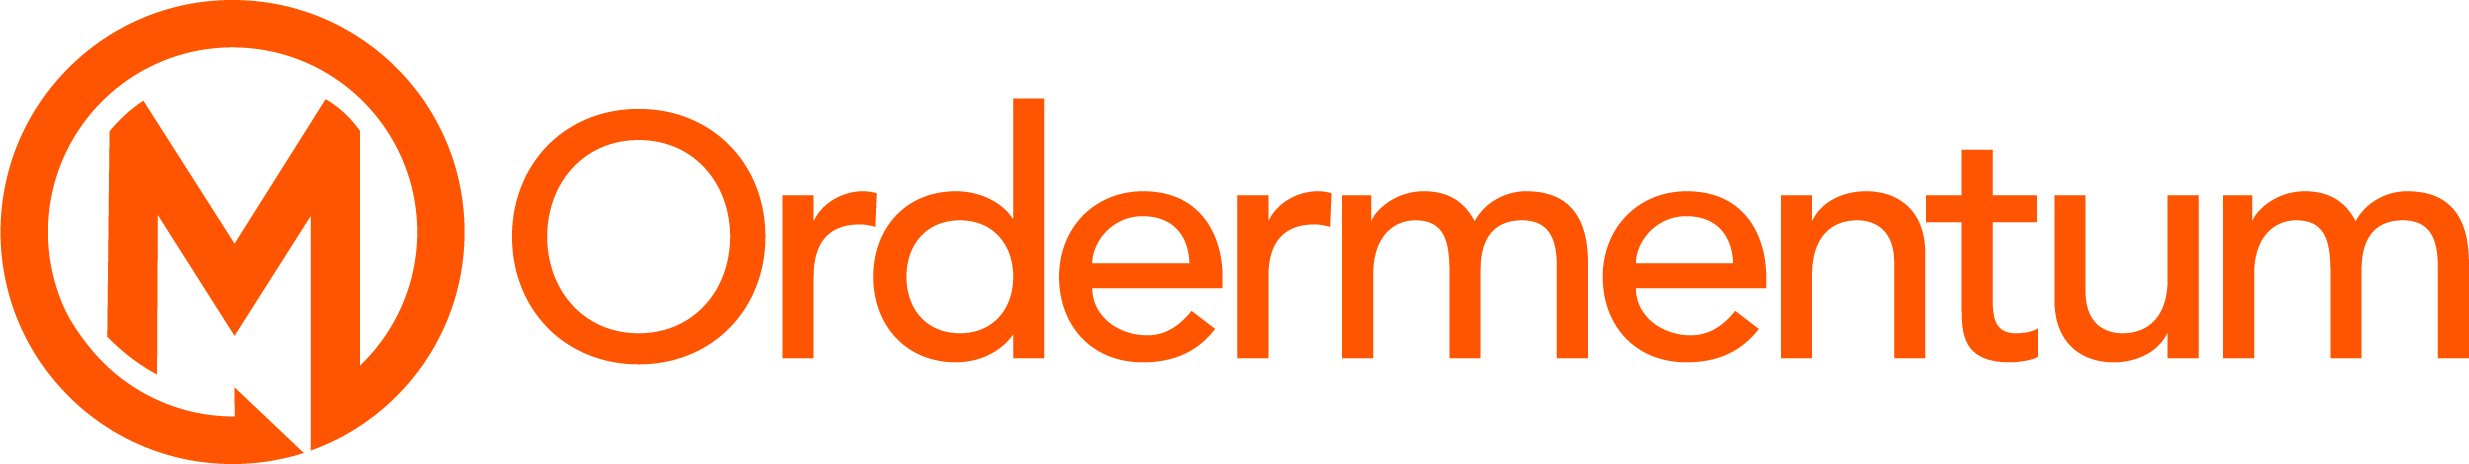 Ordermentum_Logo_Legacy Orange-1